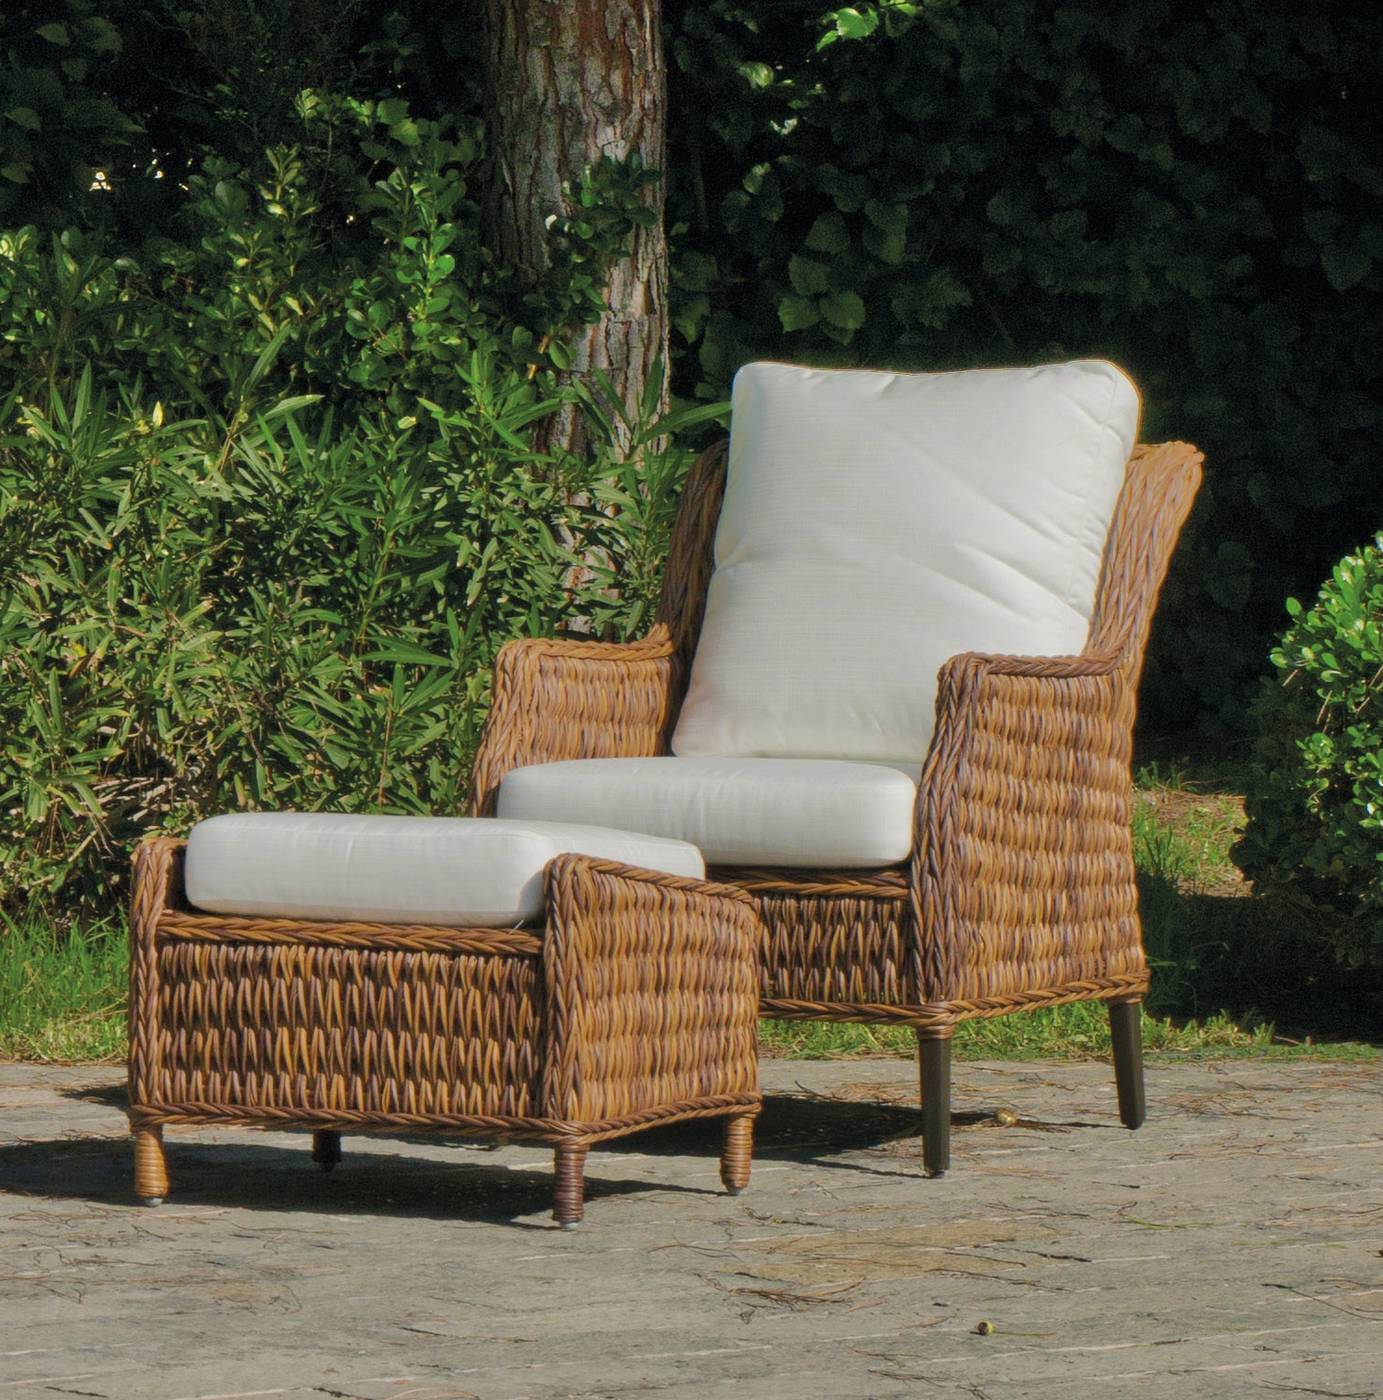 Set Médula Luxe Panama-9 - Conjunto de médula sintética lujo para jardín. Formado por: 1 sofá de 2 plazas + 2 sillones + 2 reposapiés + 1 mesa de centro + cojines